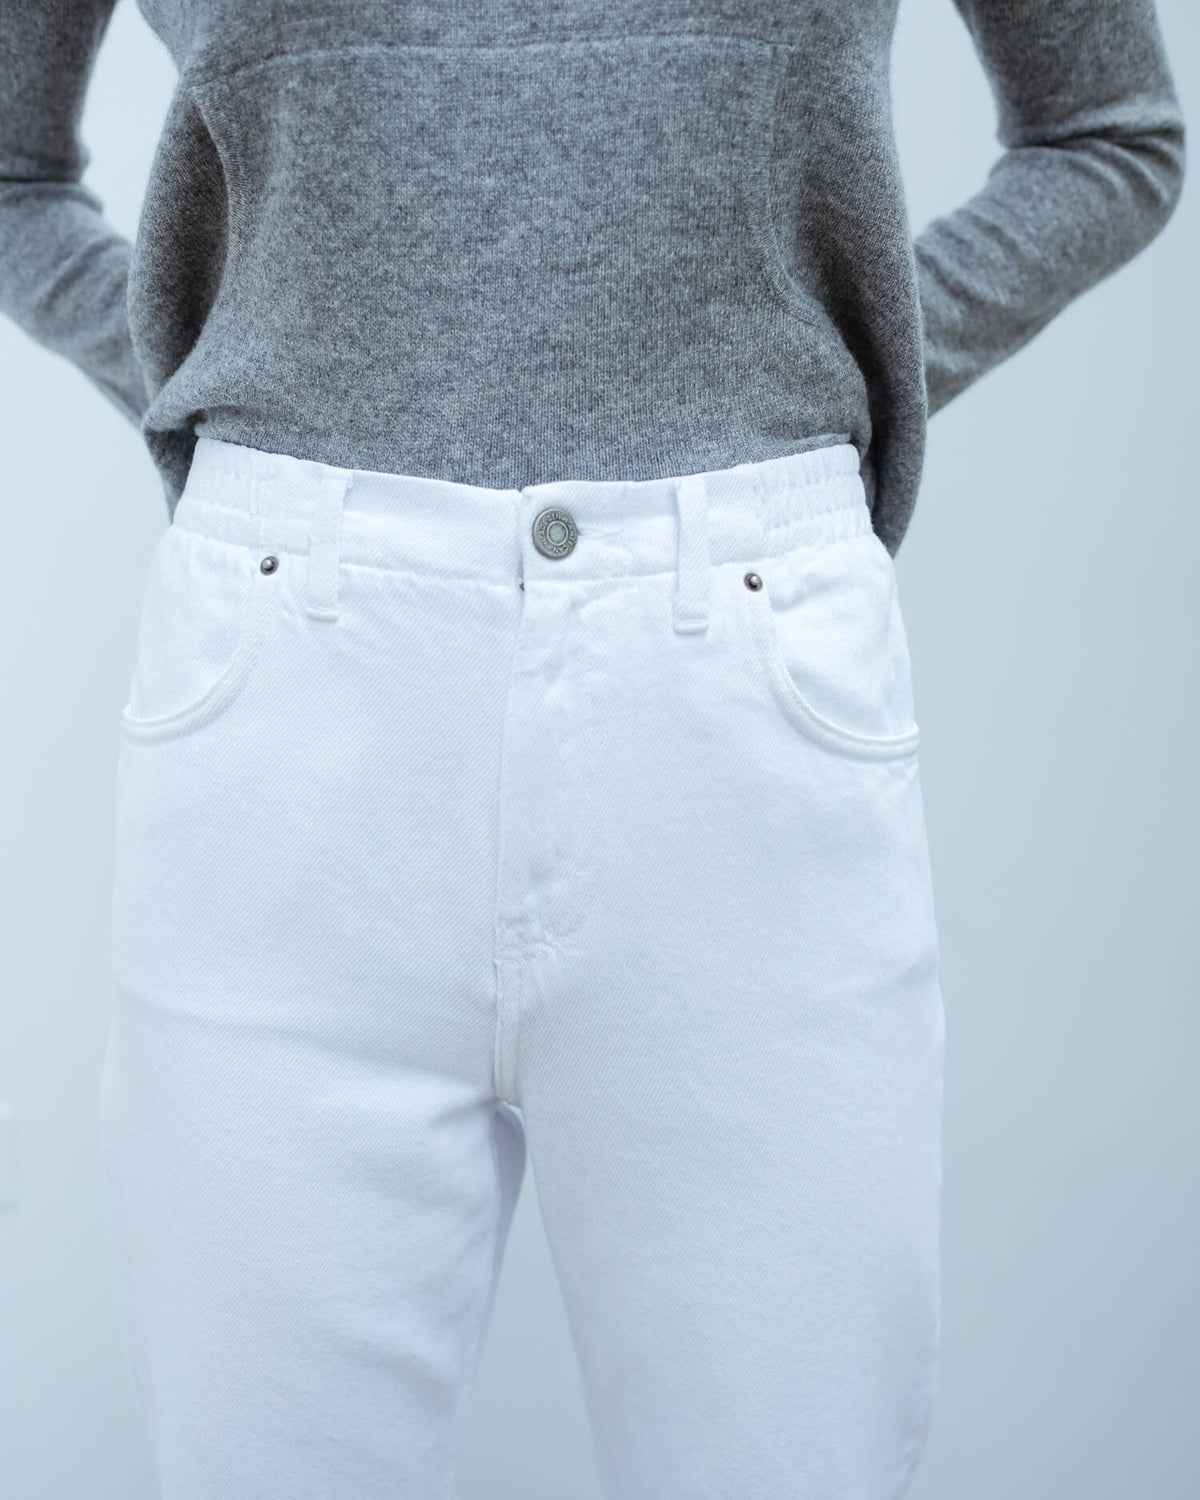 AV TINE173 5 pocket jean in white